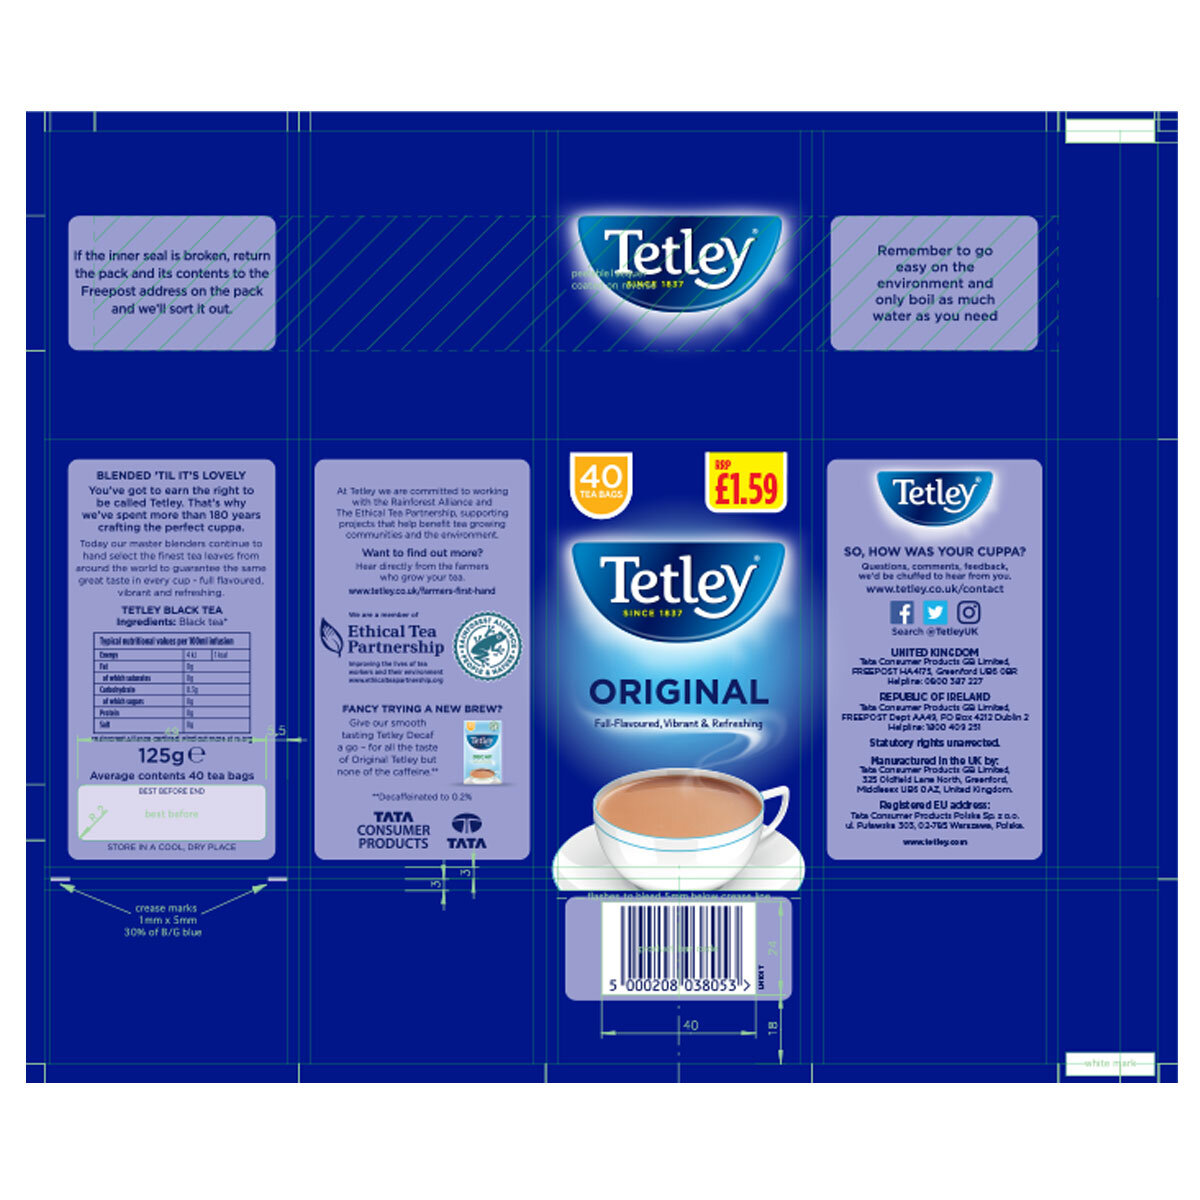 Tetley Original 240 Tea Bags 750g, Breakfast Tea